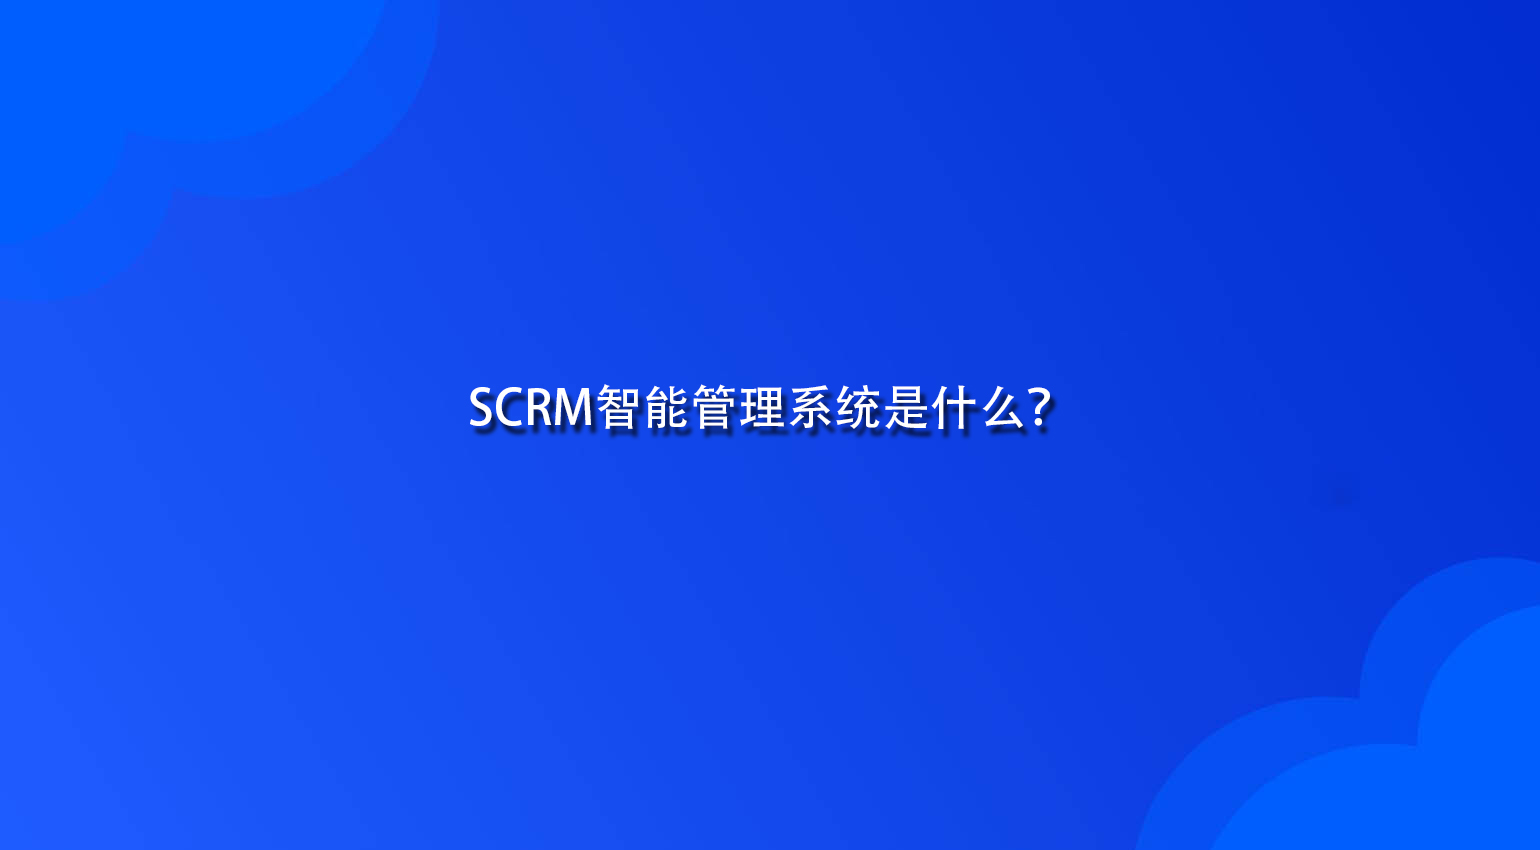 SCRM智能管理系统是什么？